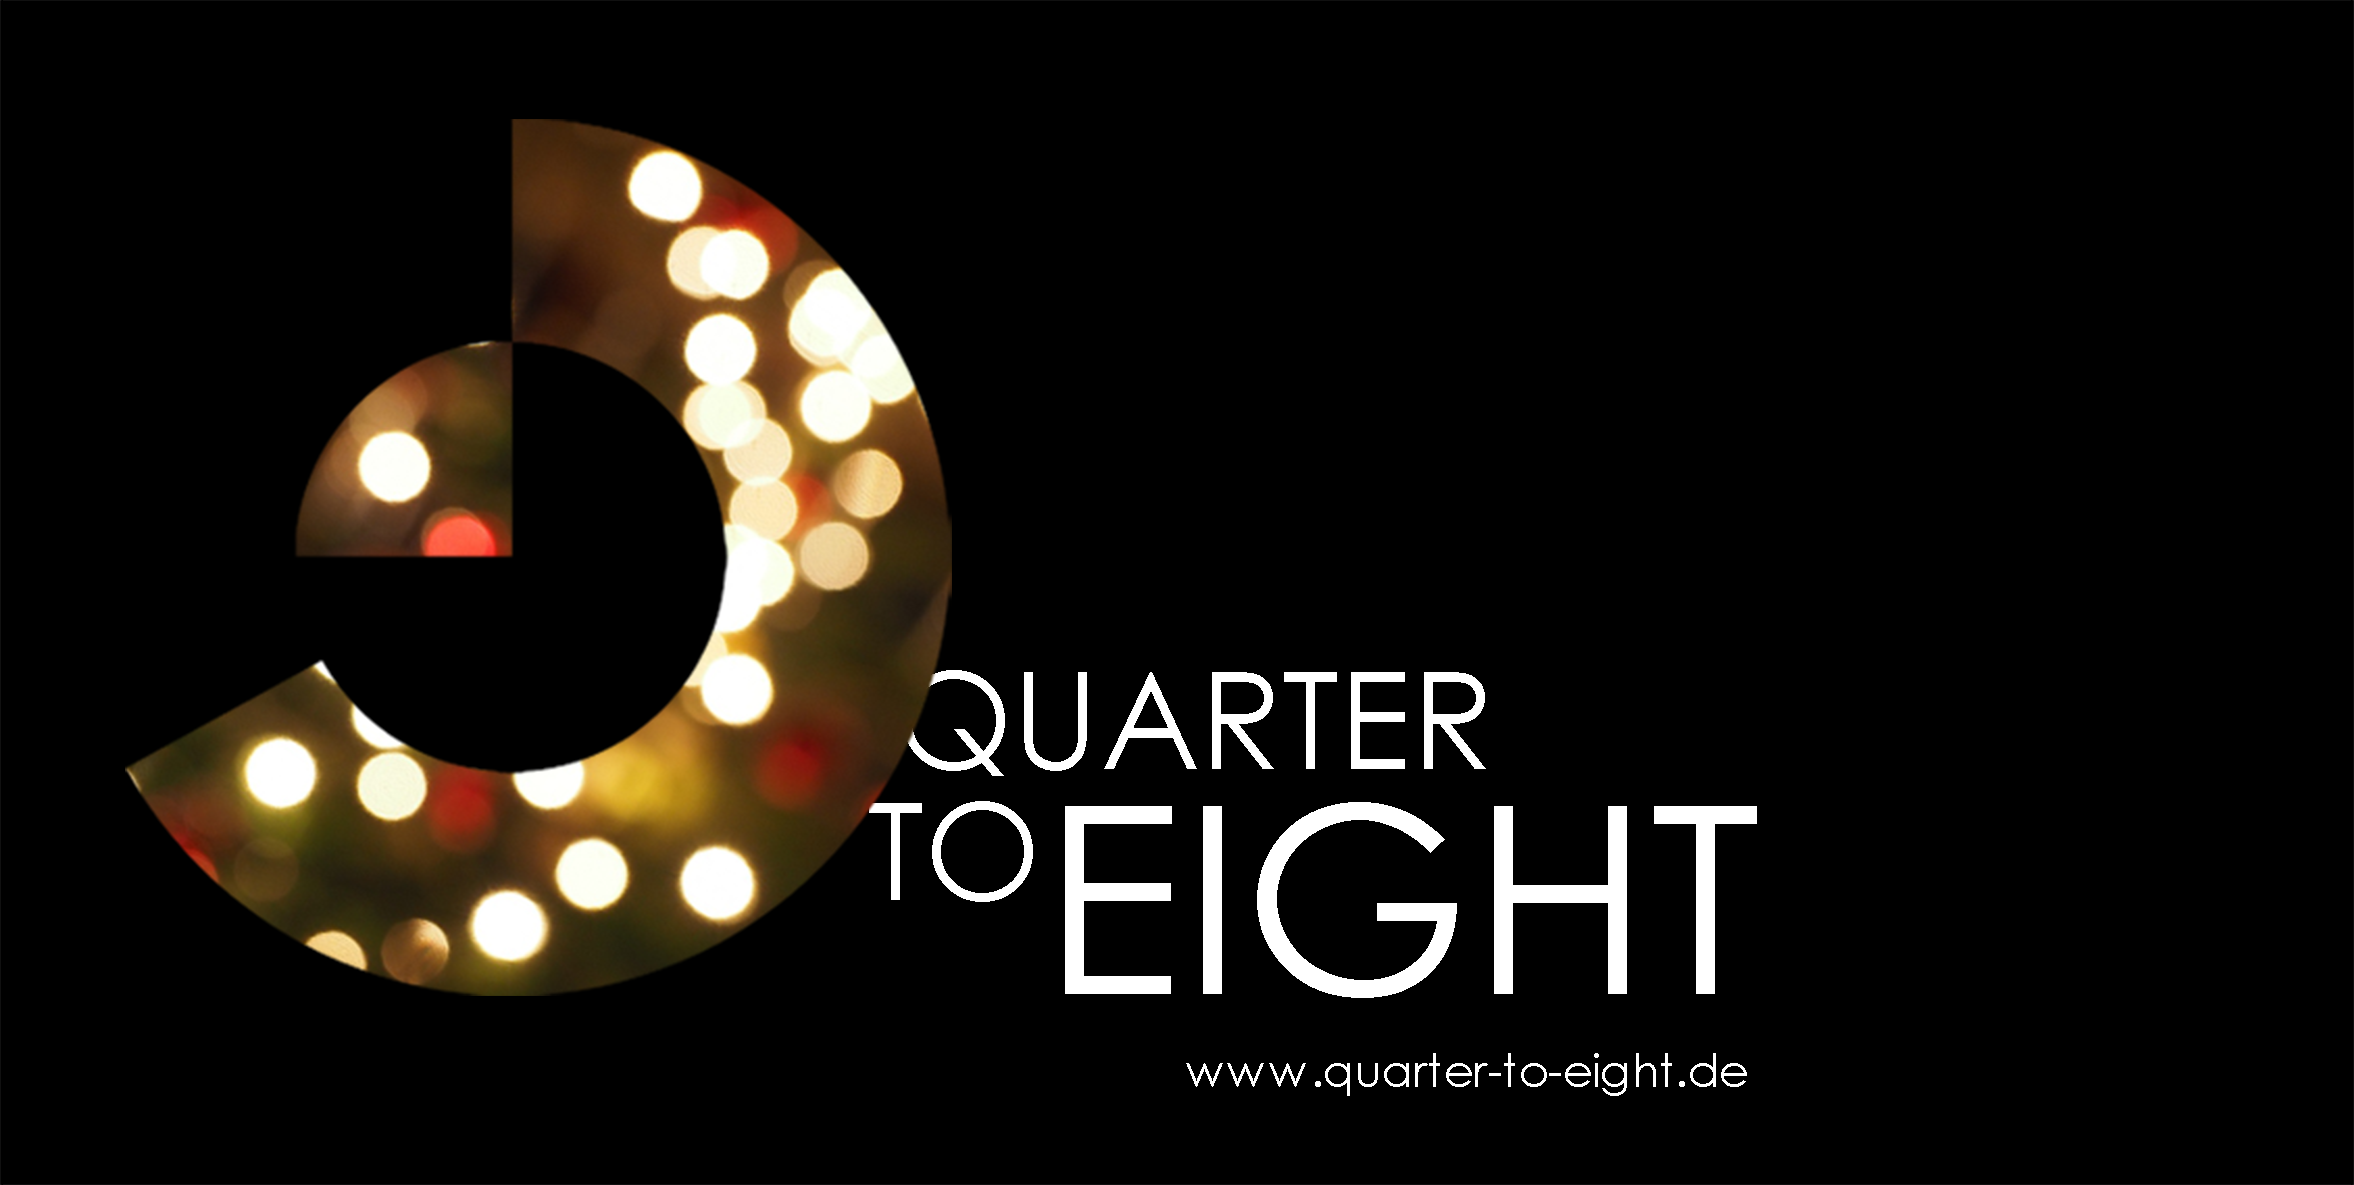 Bigband "Quarter to eight"